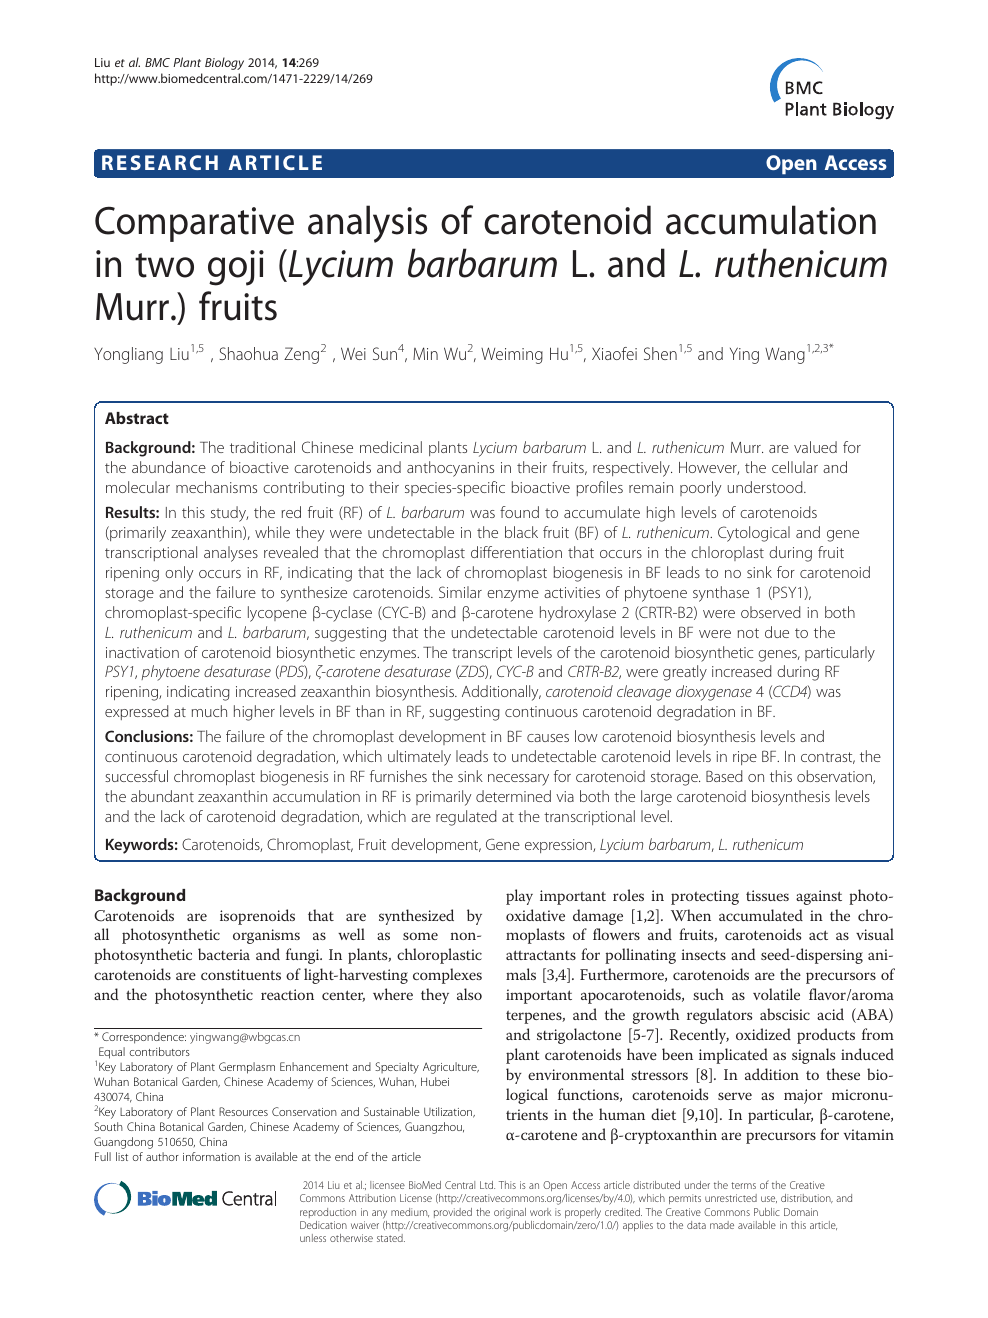 Comparative Analysis Of Carotenoid Accumulation In Two Goji